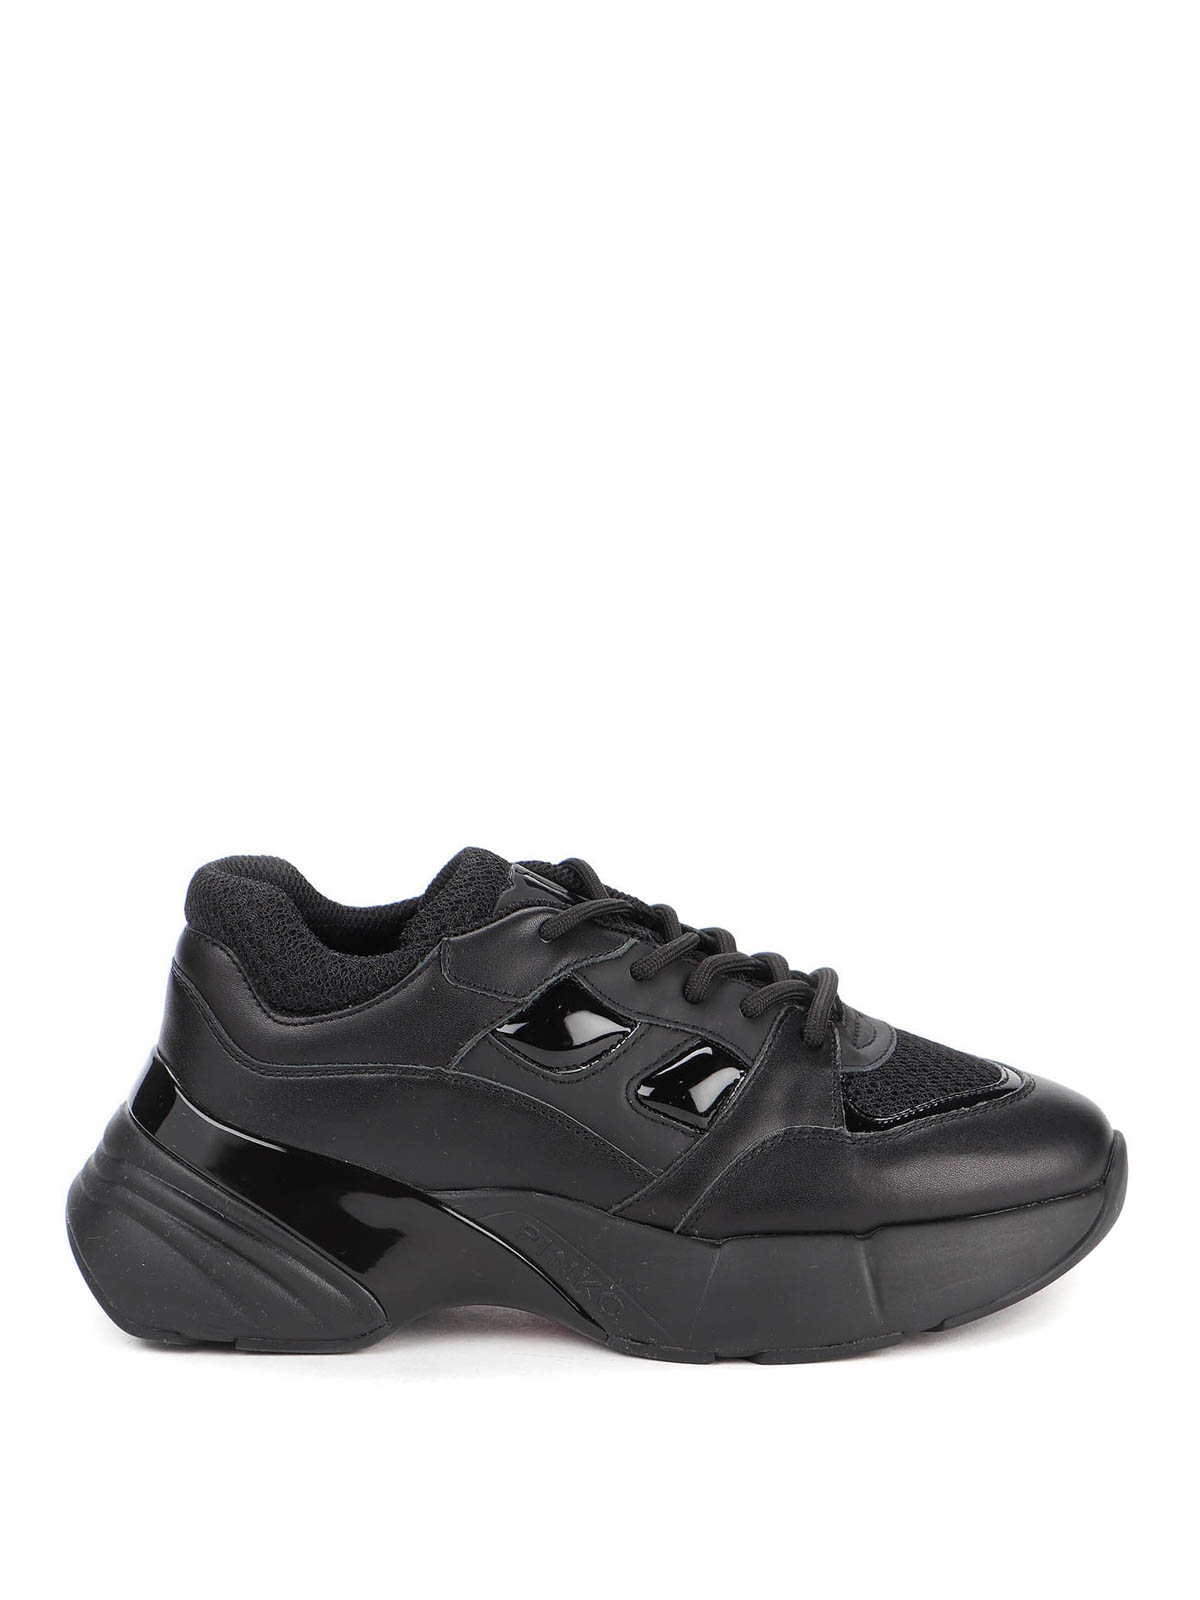 Trainers Pinko - Rubino 4 sneakers - 1P21ZEY6GDZ99 | Shop online at iKRIX